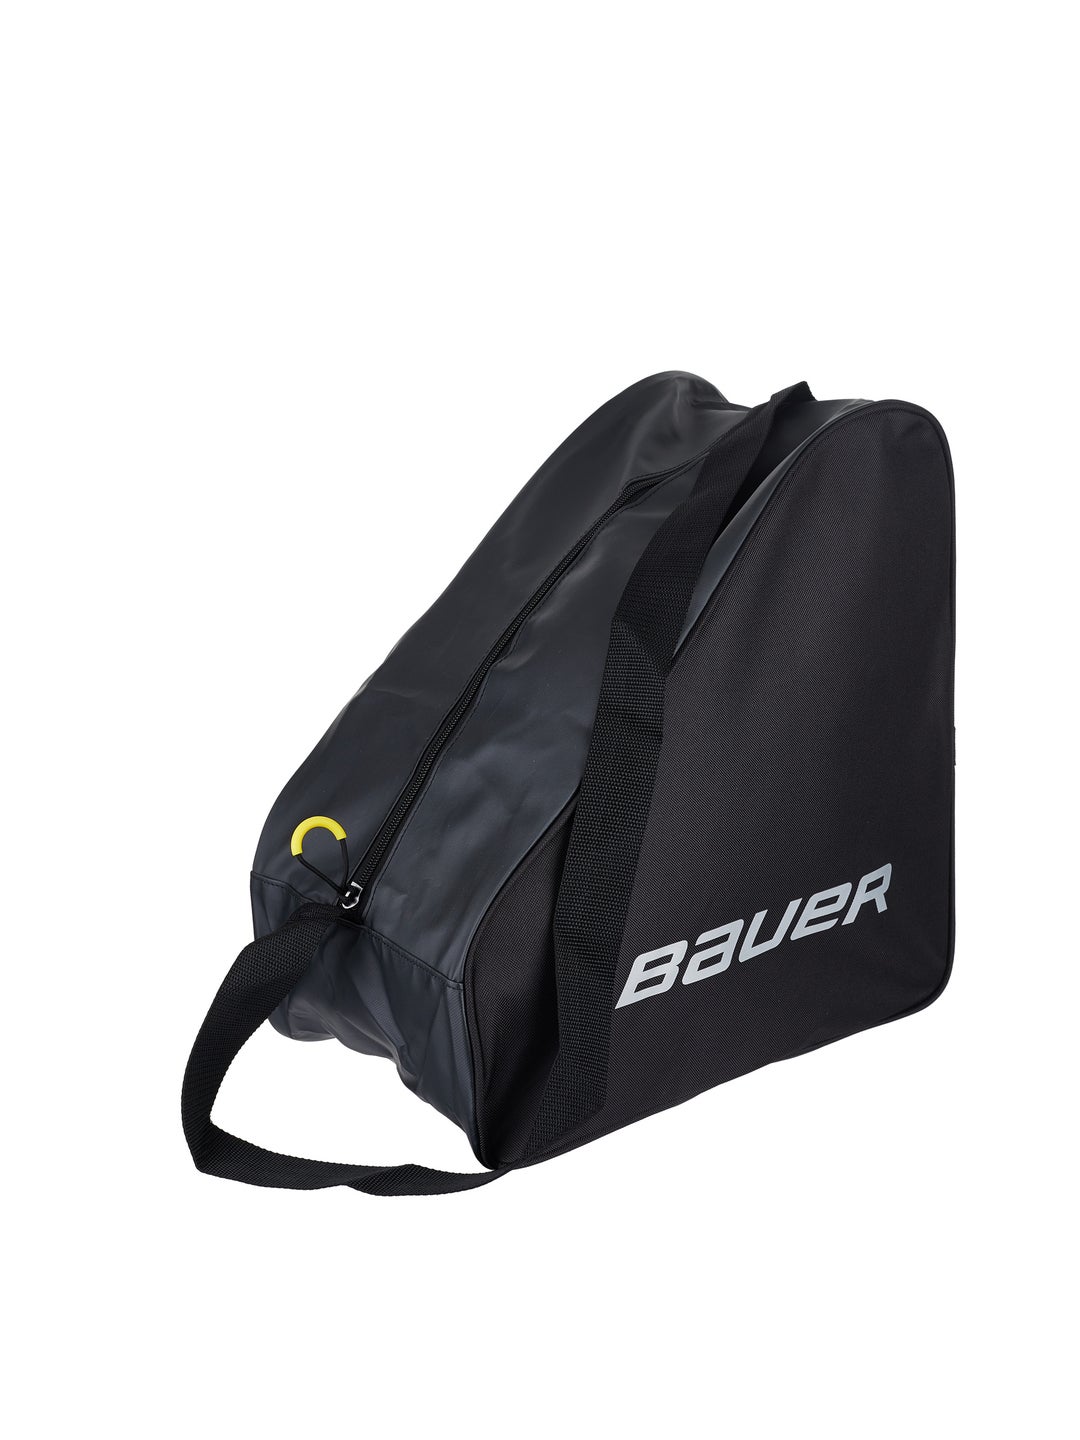 Bauer S19 Skate Hockey Bag - Inline Warehouse